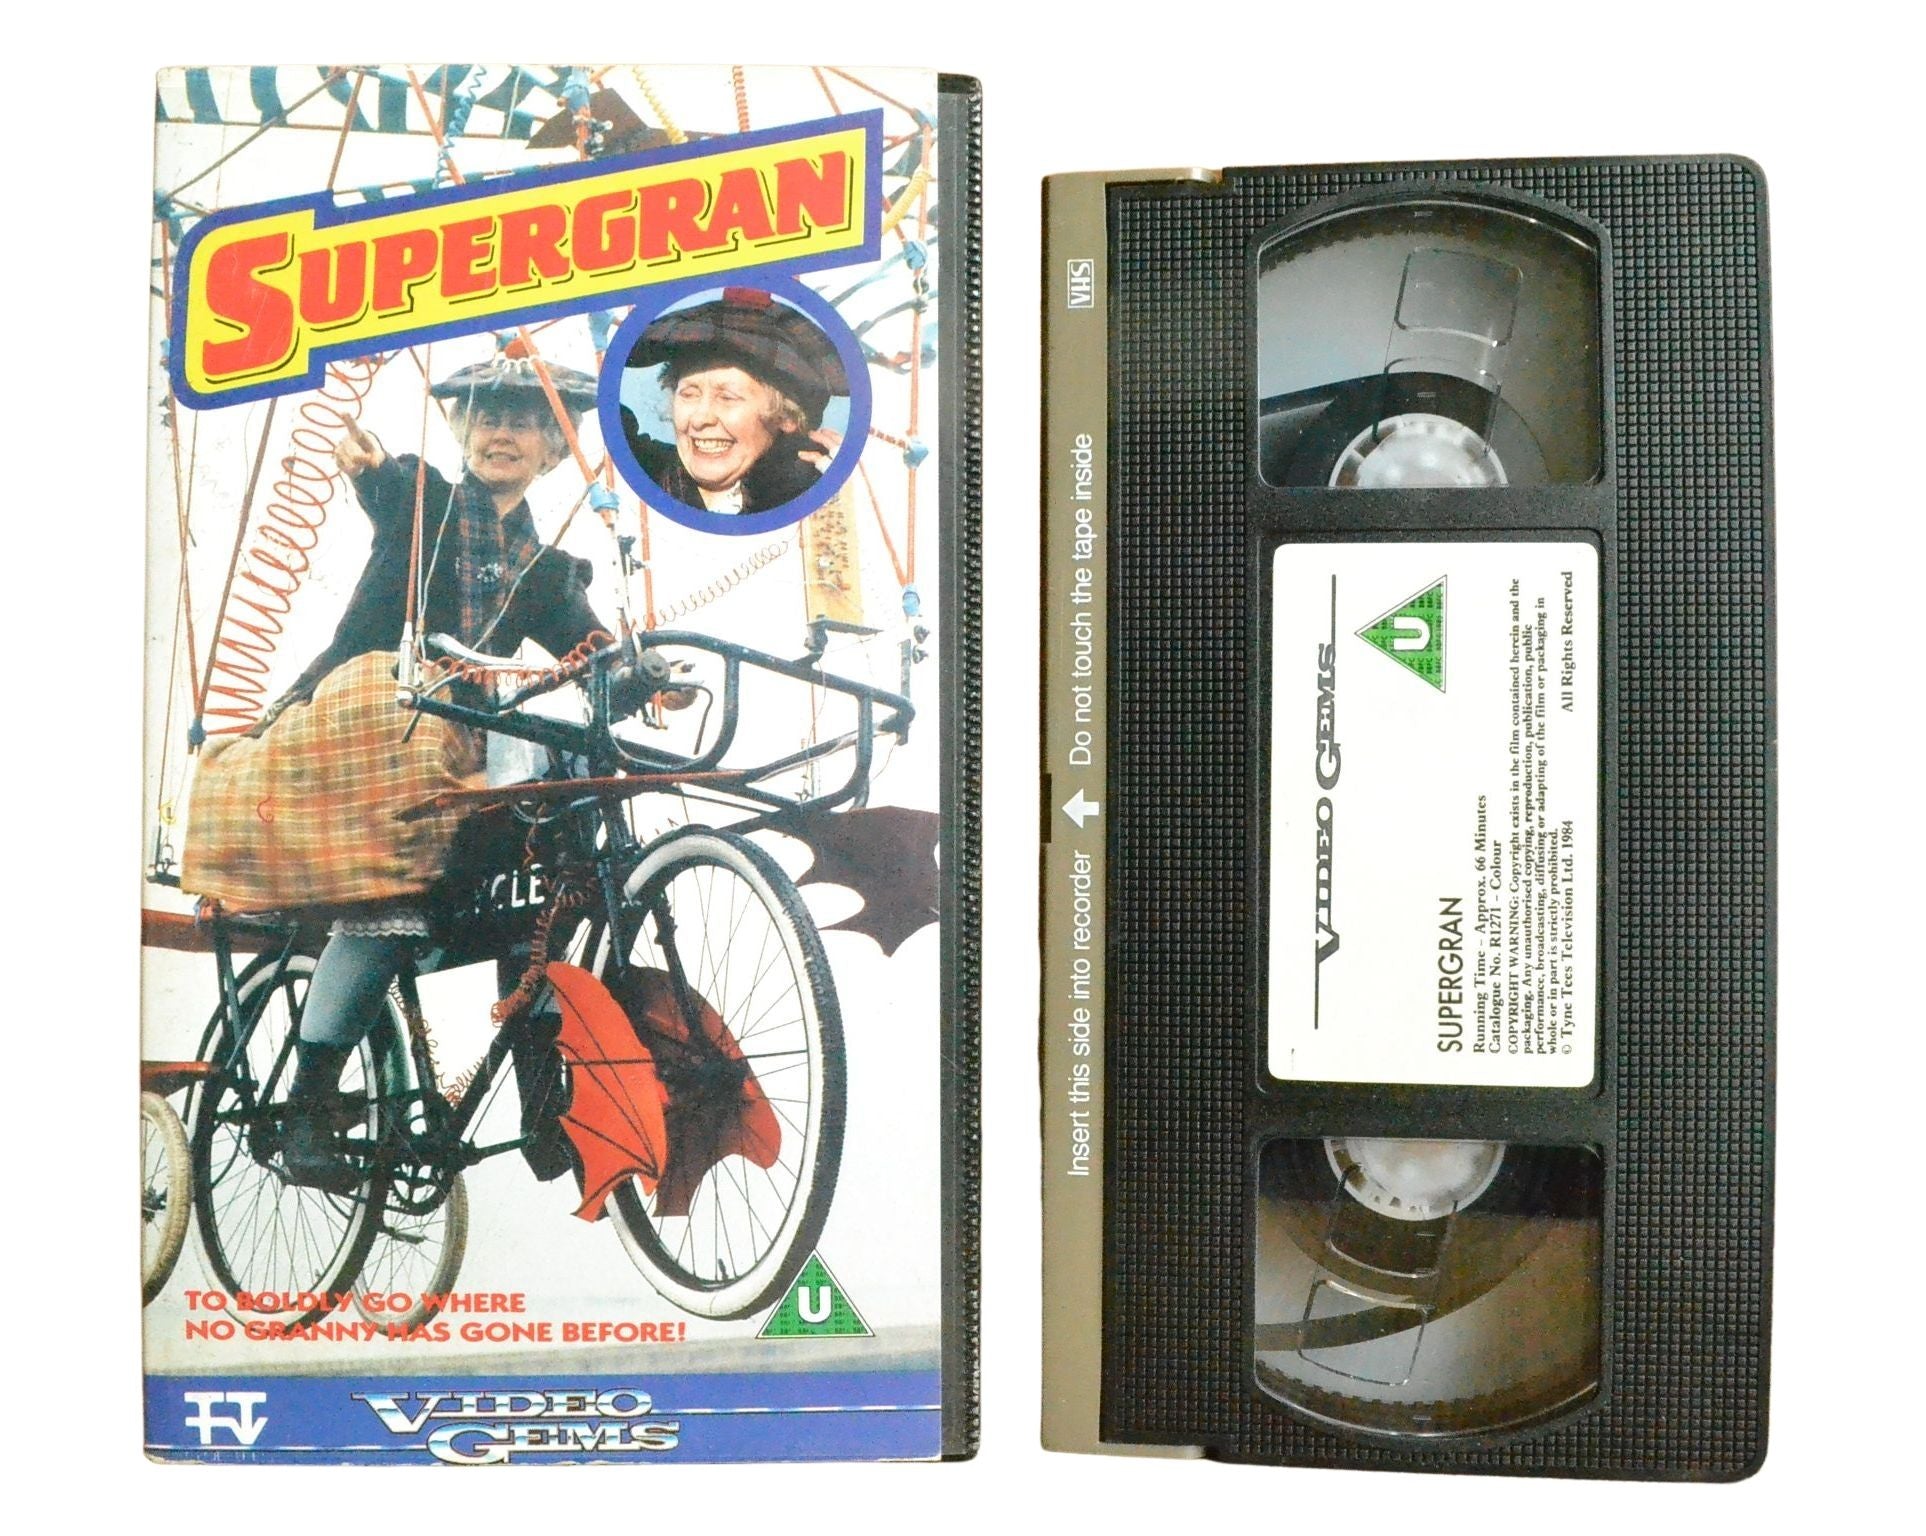 Supergran - Gudrun Ure - Children’s - Pal VHS-